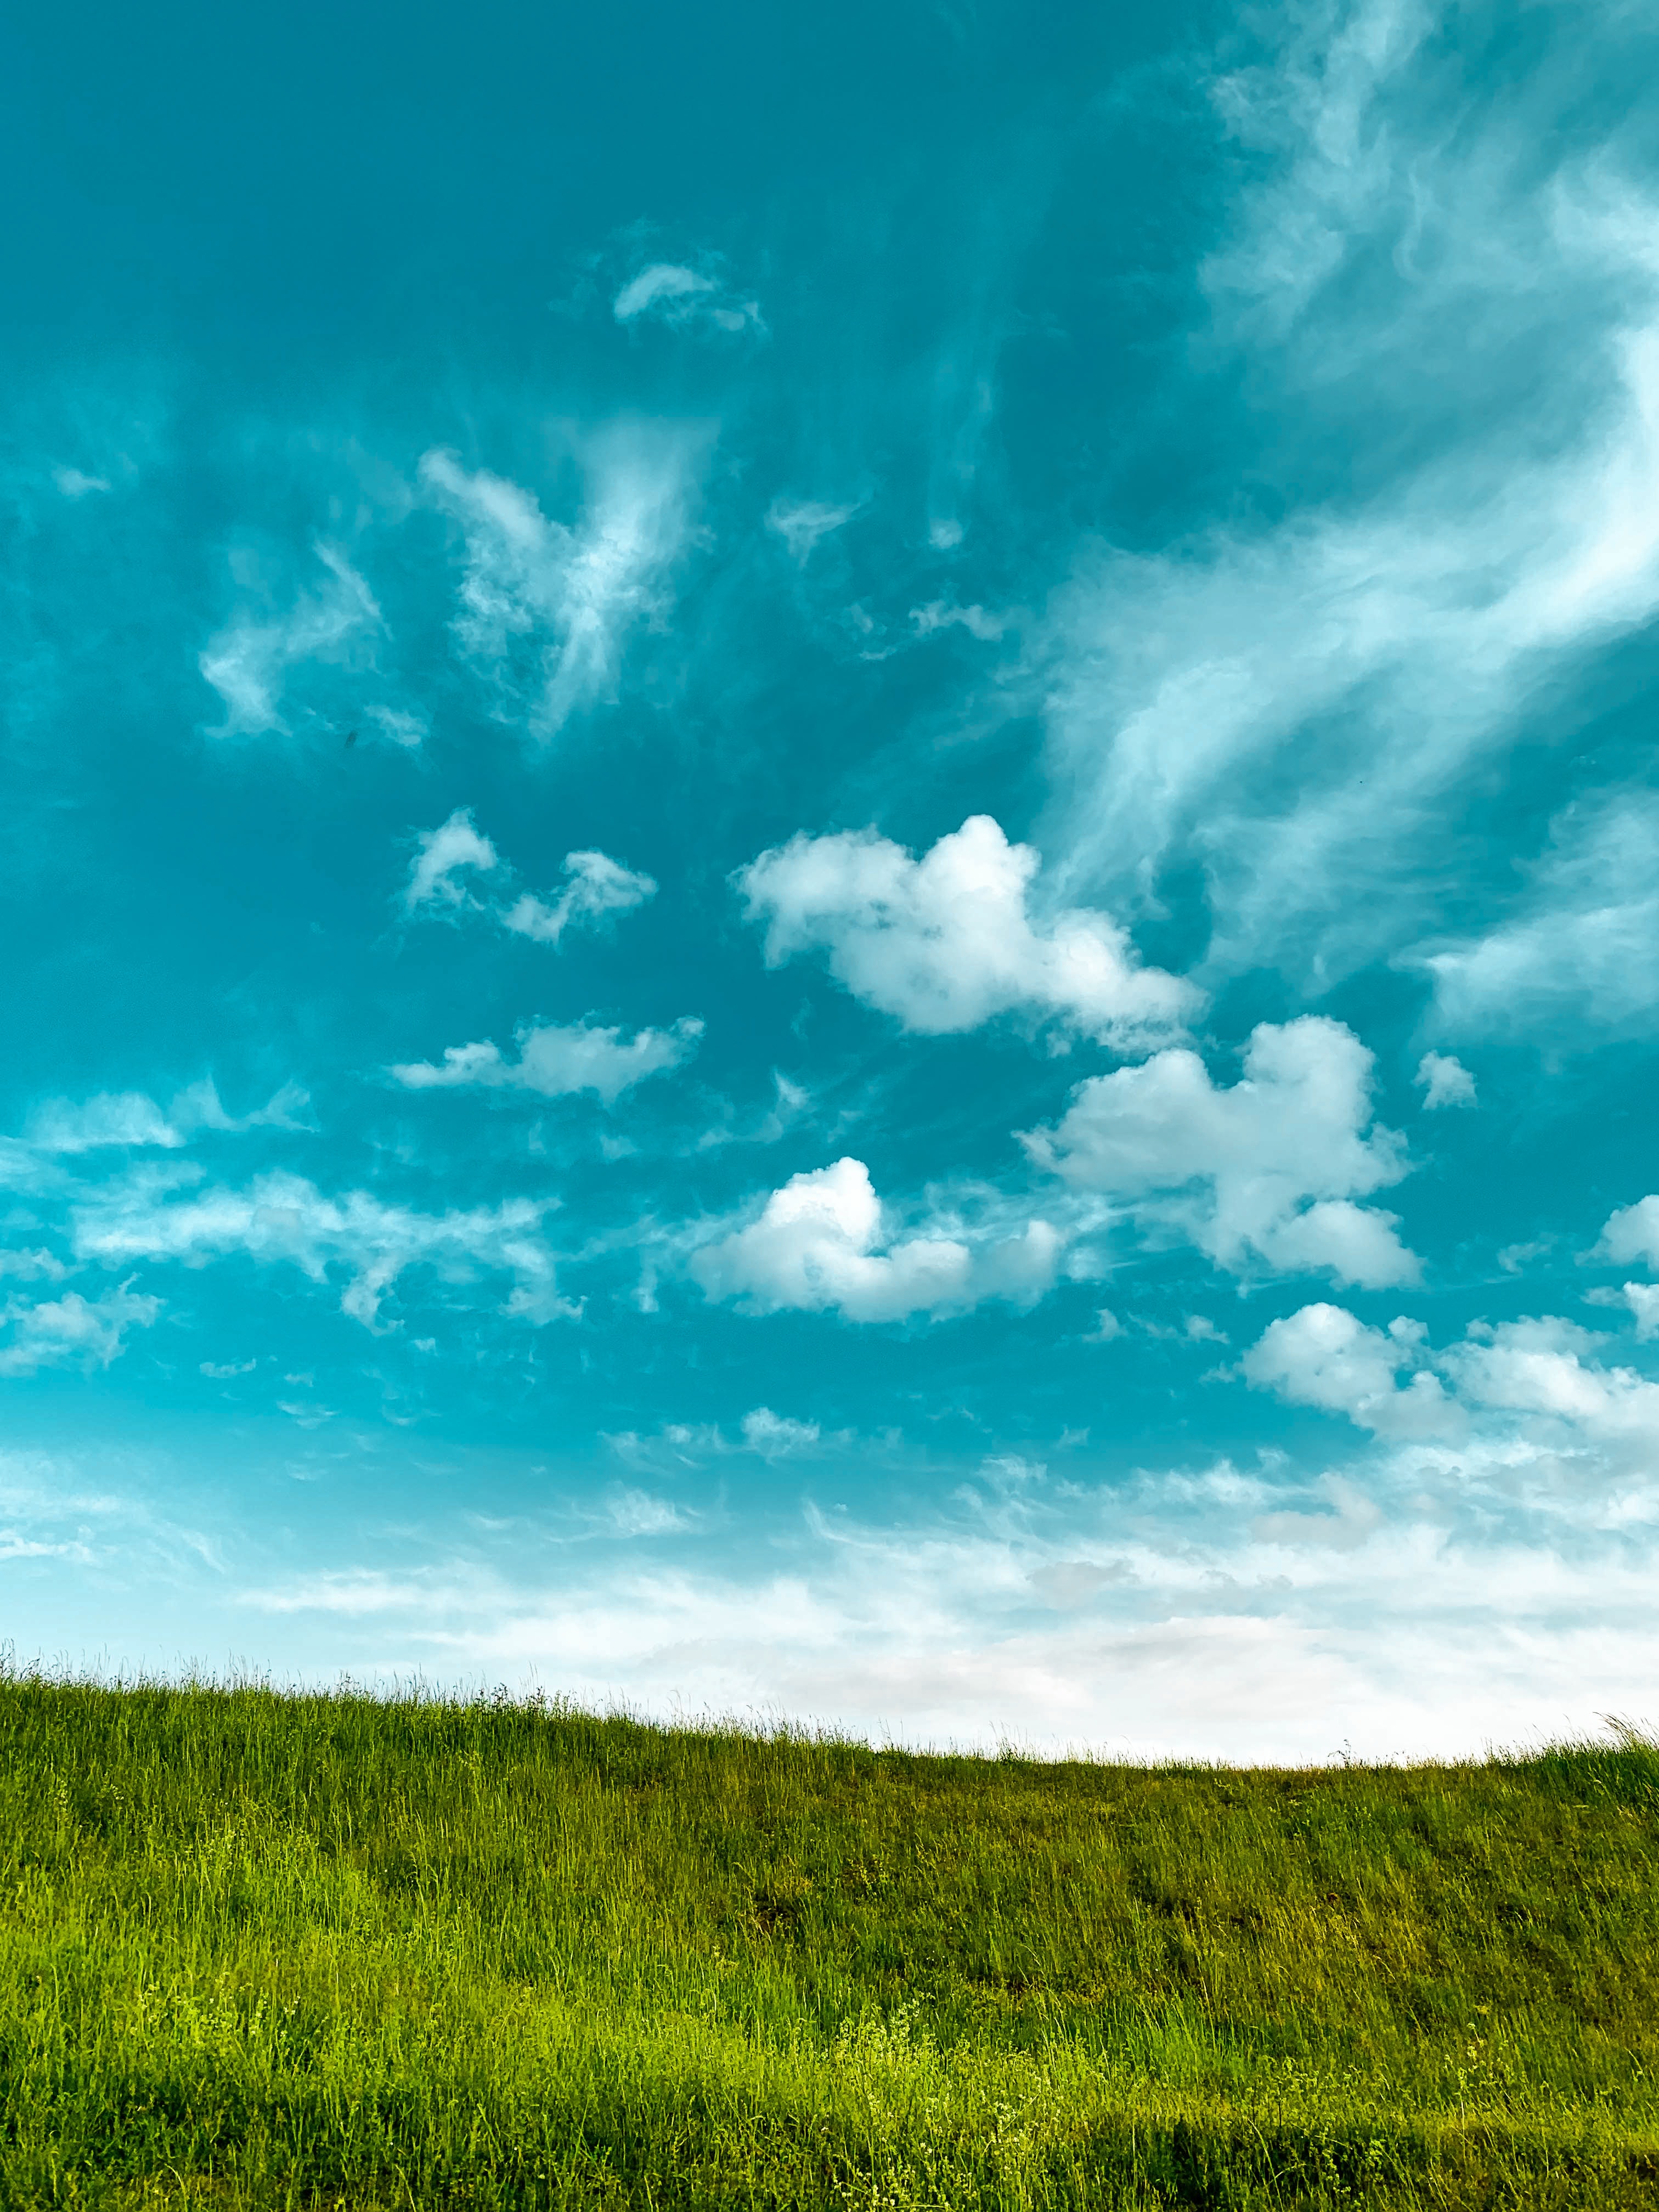 minimalism, clouds, nature, grass, sky